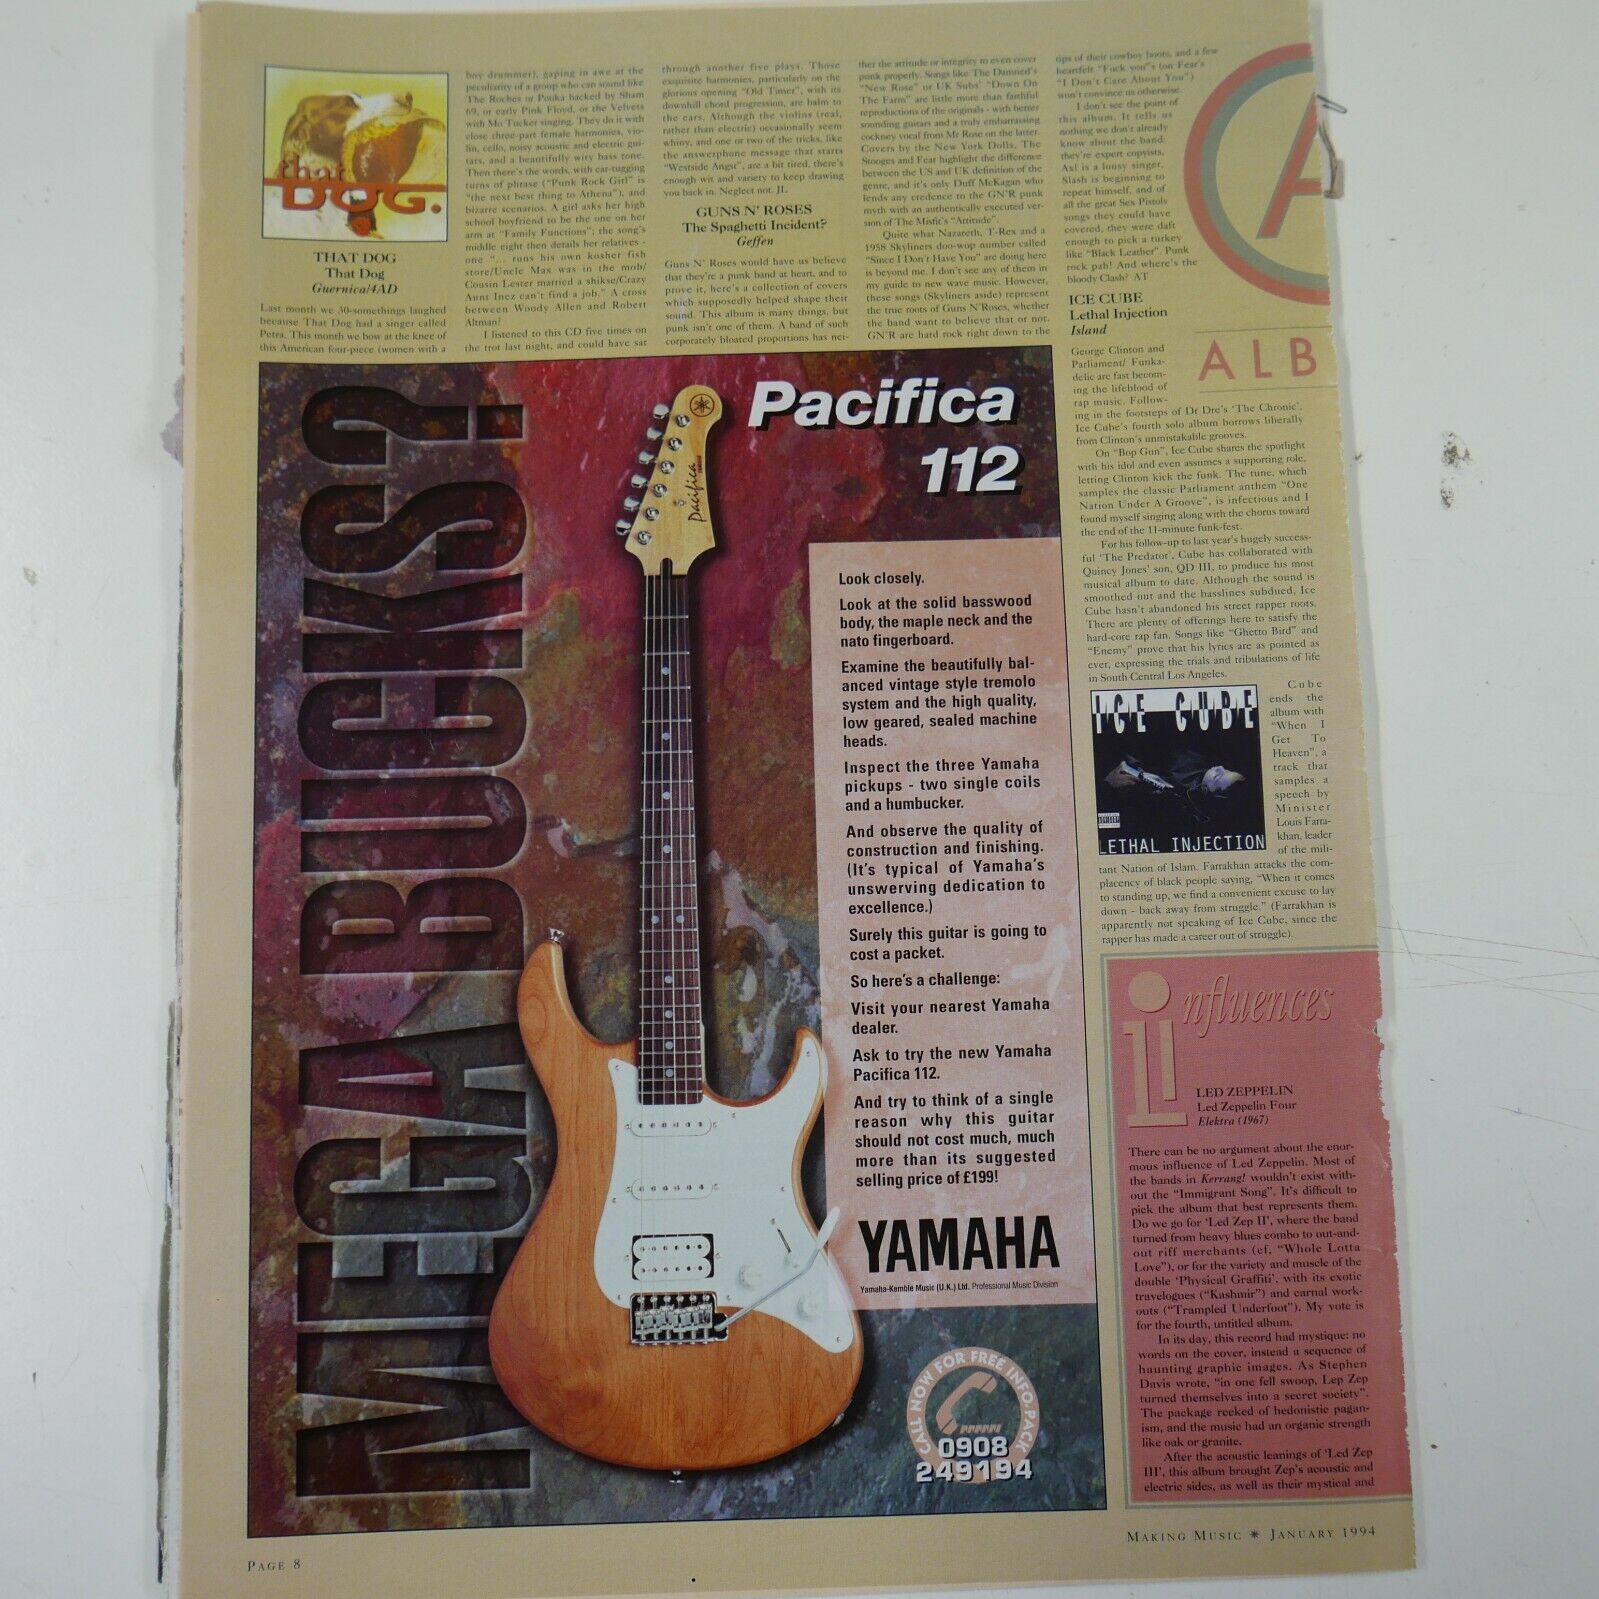 21x30cm magazine cutting 1994 YAMAHA PACIFICA 112